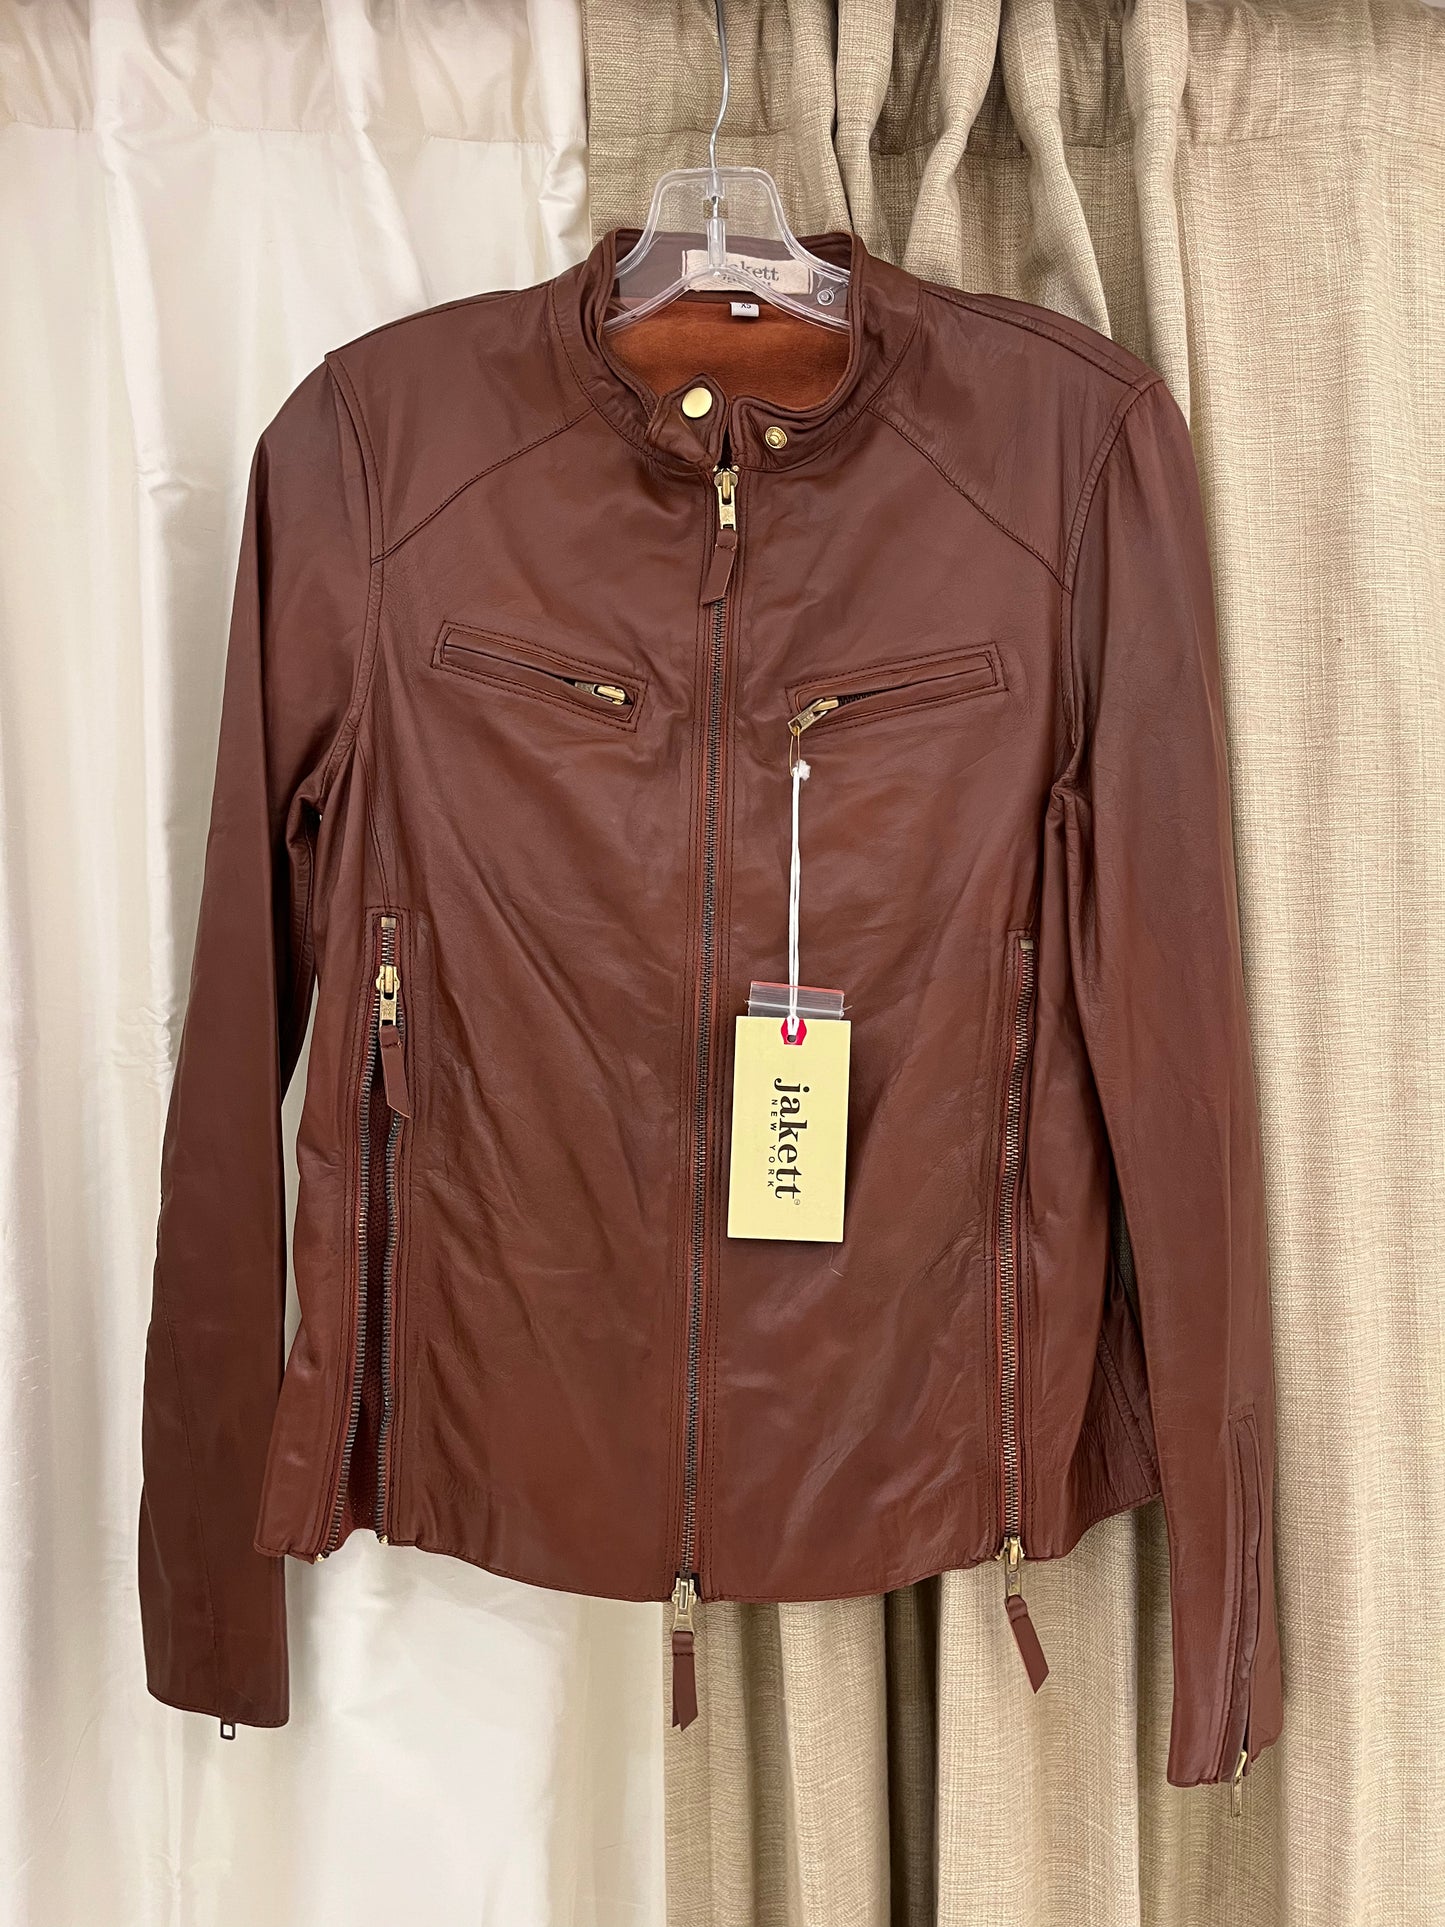 Vespa Vintage Leather Jacket